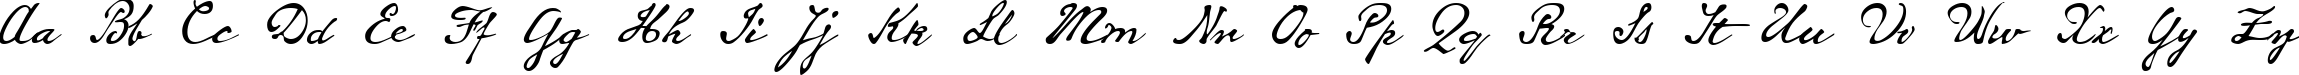 Пример написания английского алфавита шрифтом Whitechapel BB